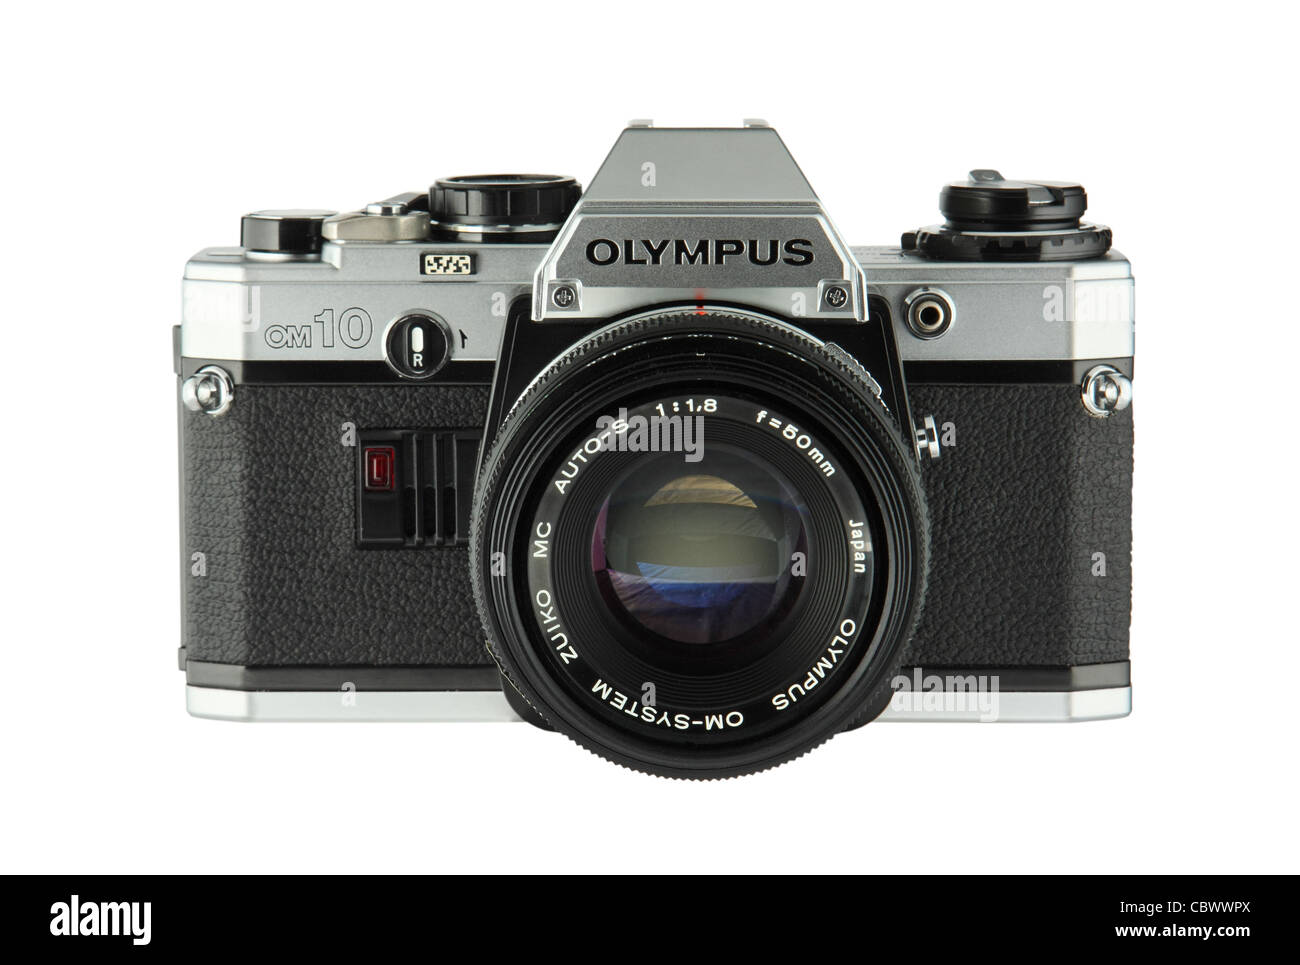 OLYMPUS om10 カメラ